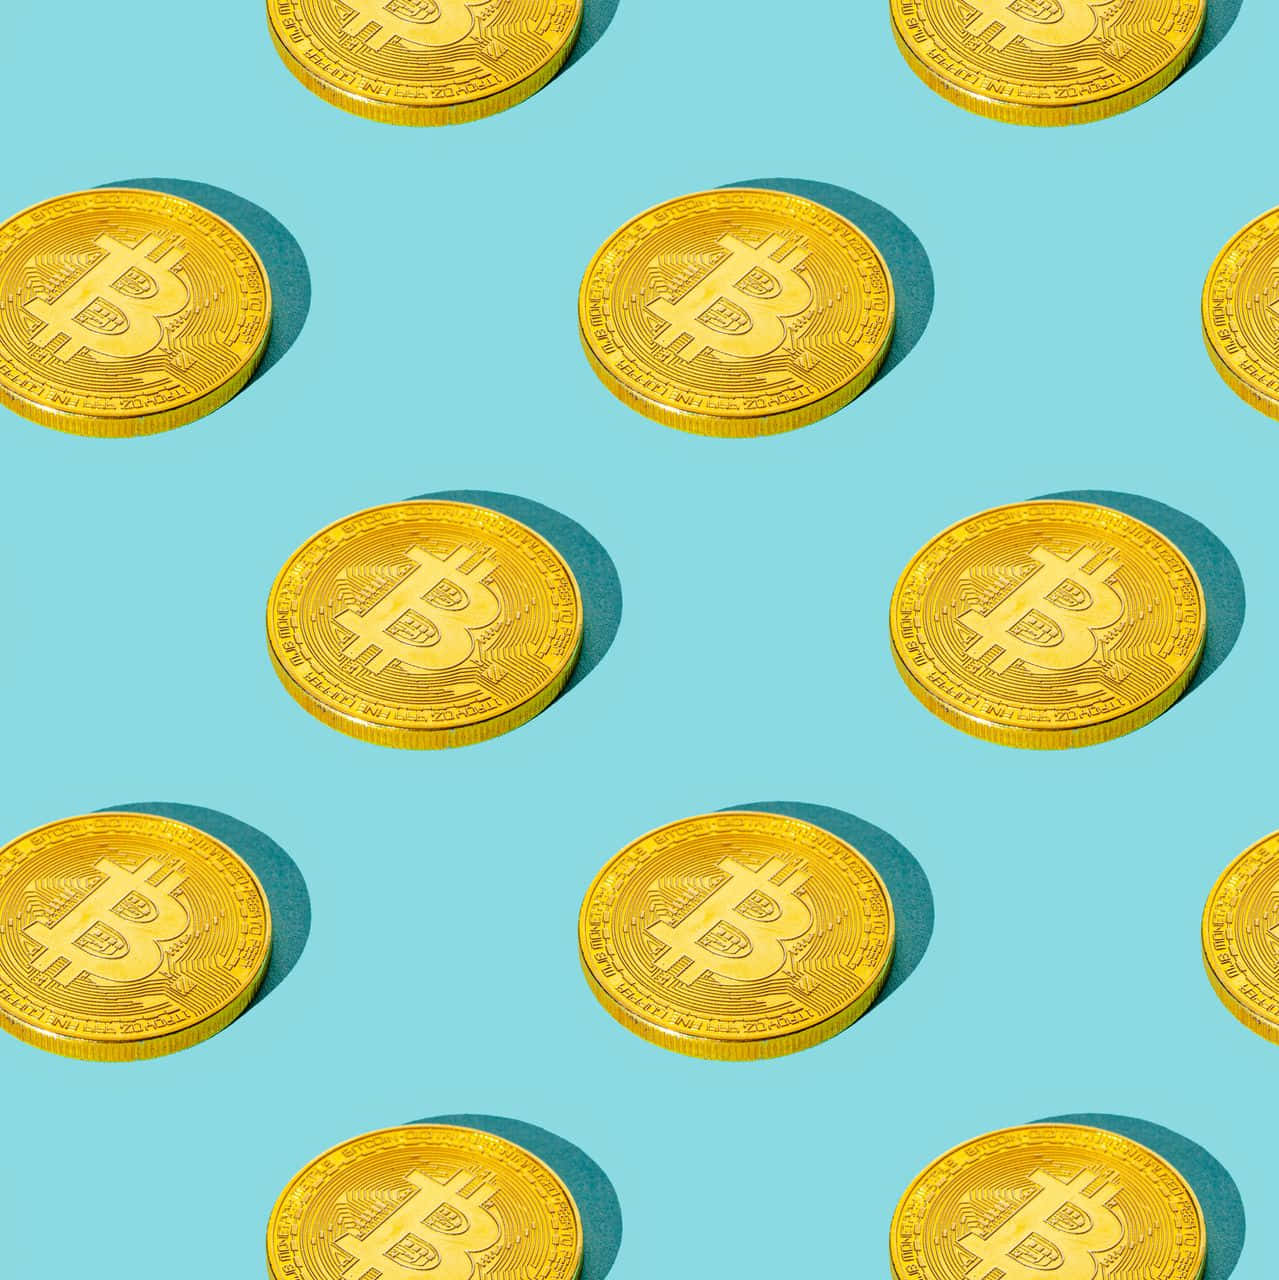 Ettmönster Av Guldiga Bitcoin-mynt På En Blå Bakgrund.